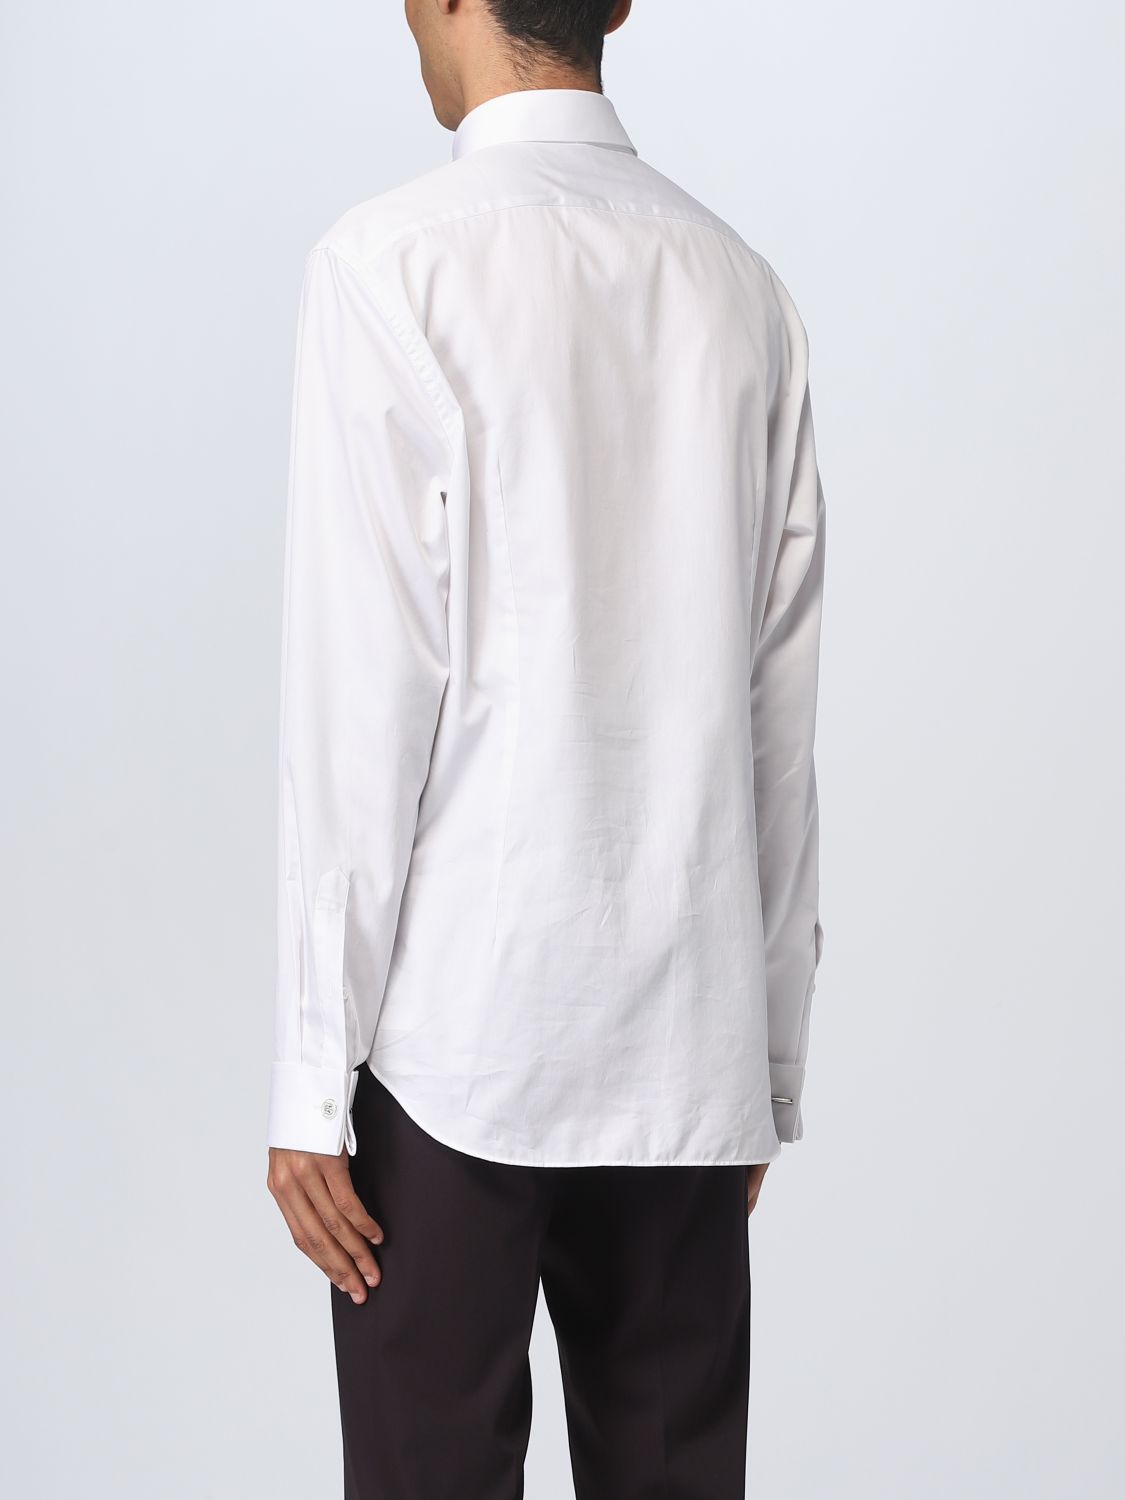 CORNELIANI: shirt for man - White | Corneliani shirt 91P9013191102 ...